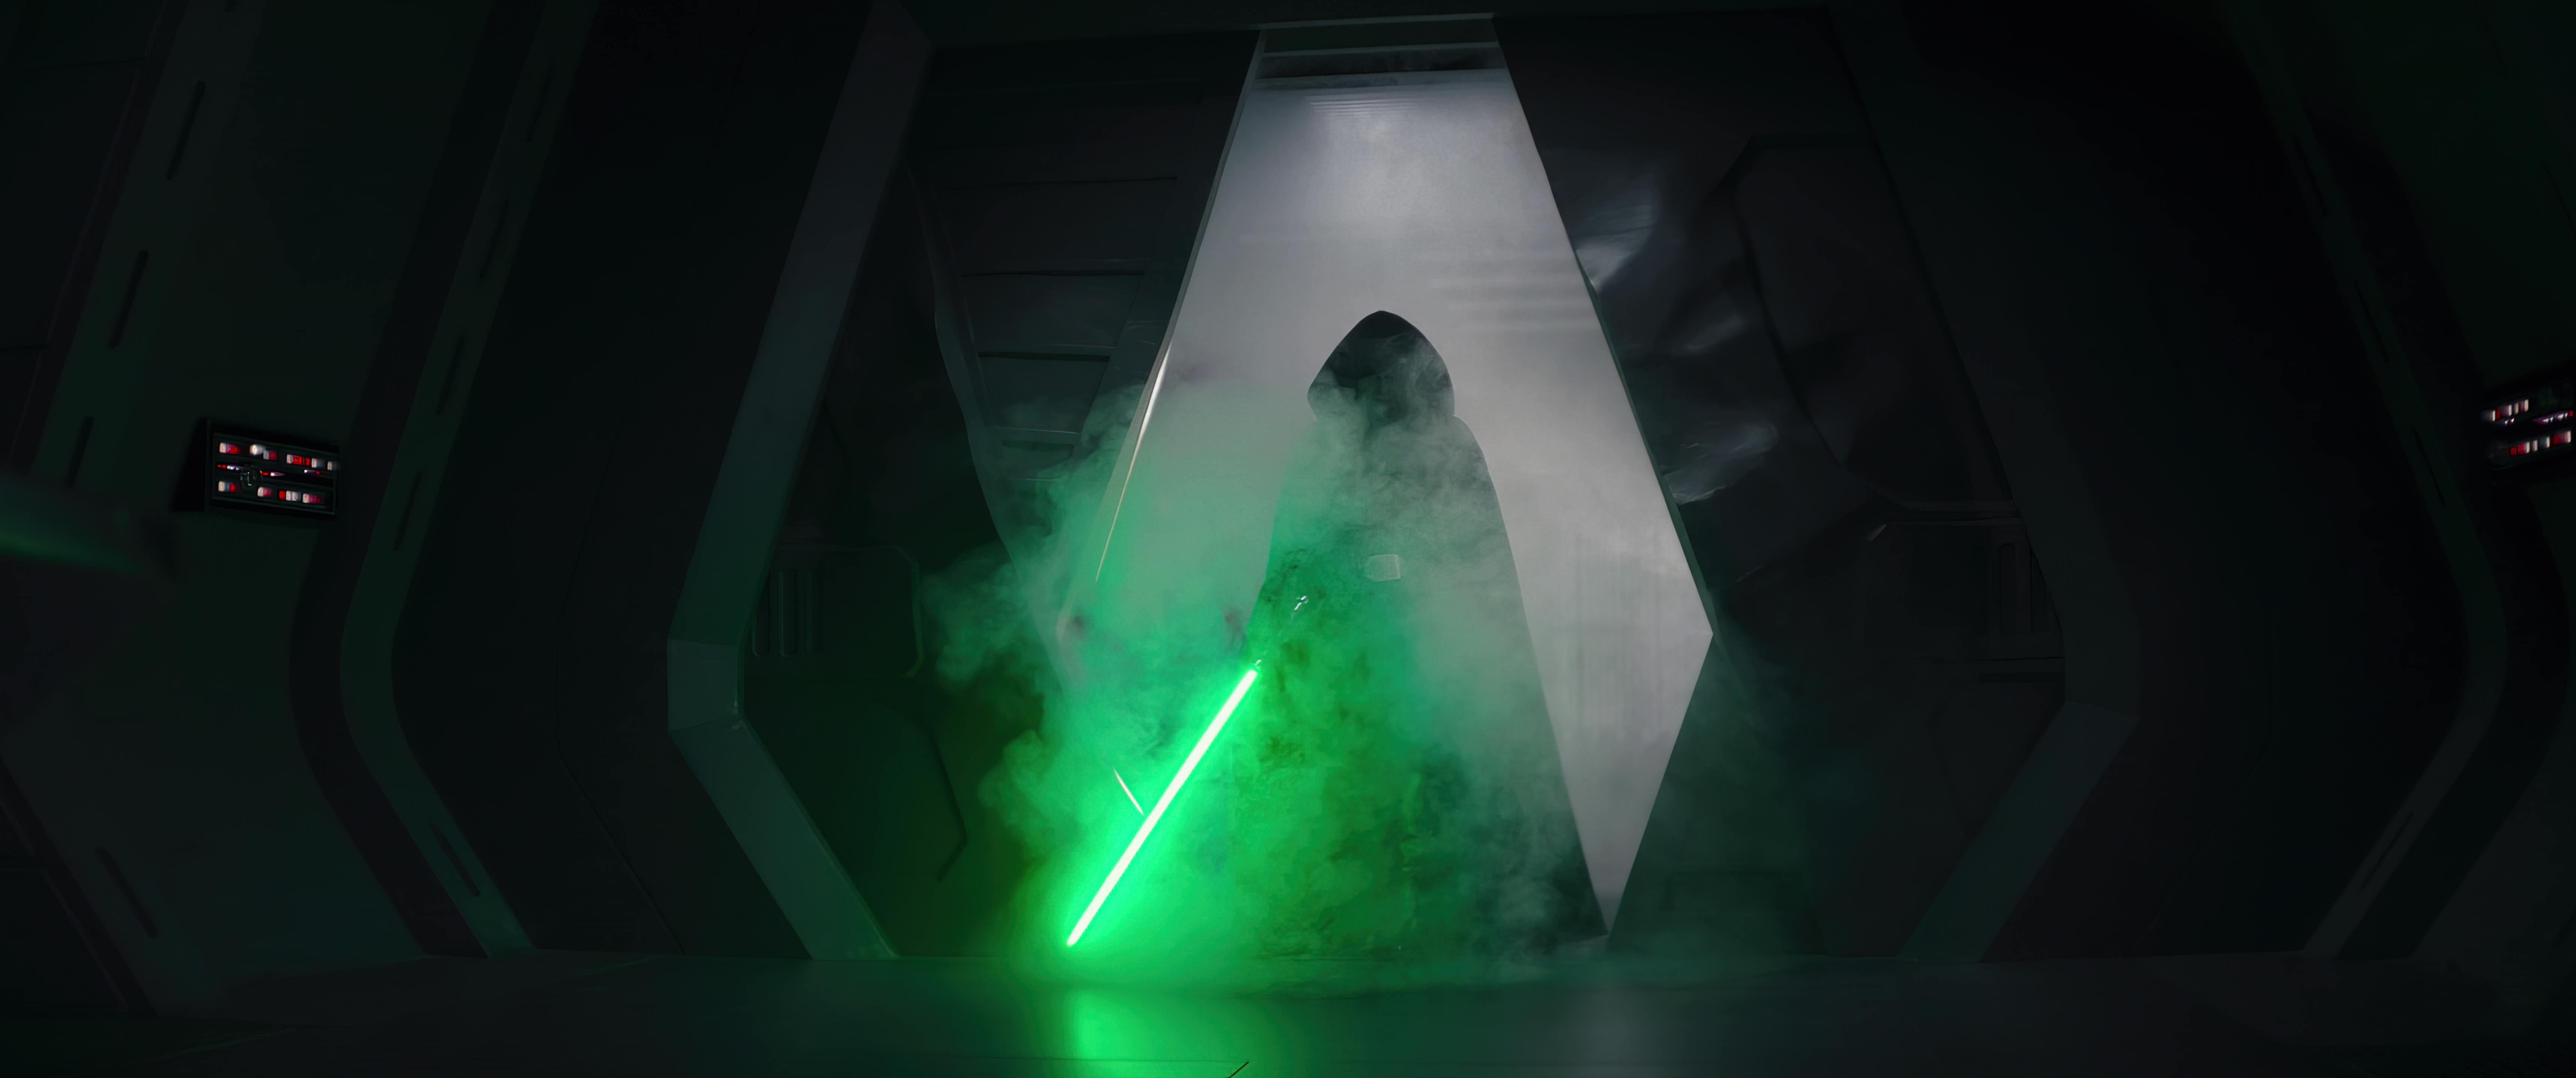 General 6880x2880 The Mandalorian Star Wars Jedi lightsaber dark side digital art hoods spaceship smoke